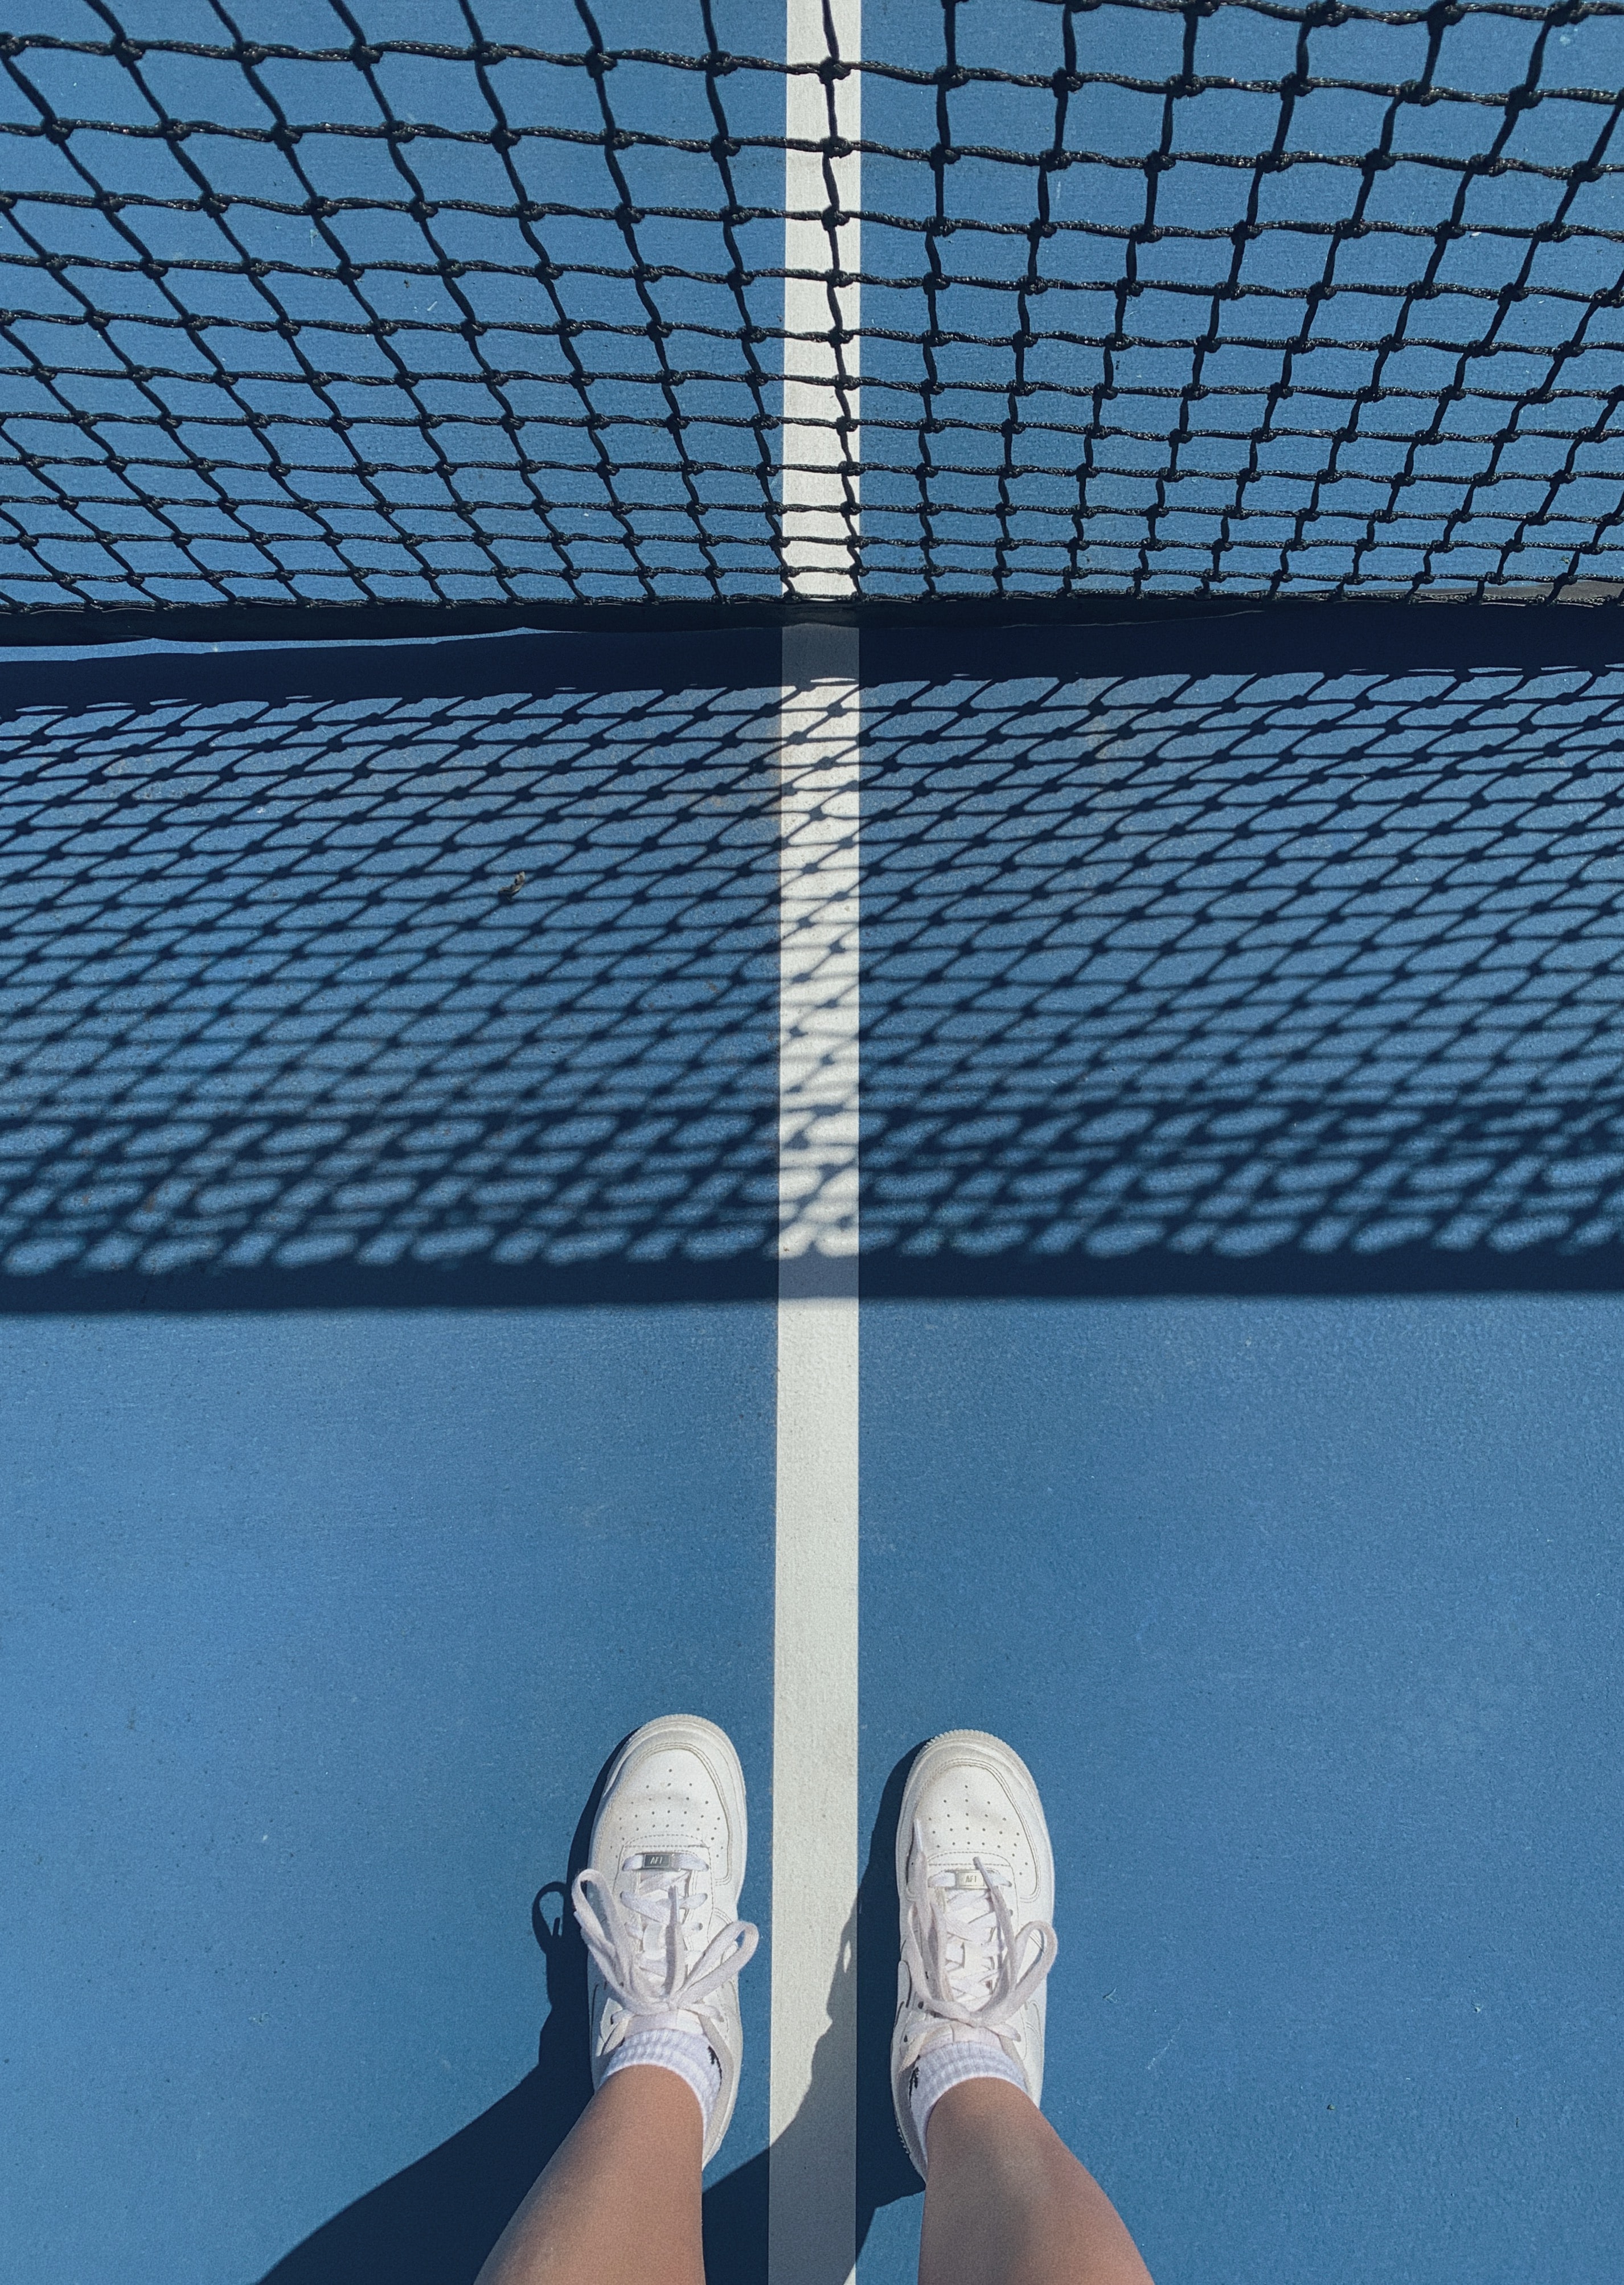 miscellanea, tennis court, tennis, grid Cell Phone Image